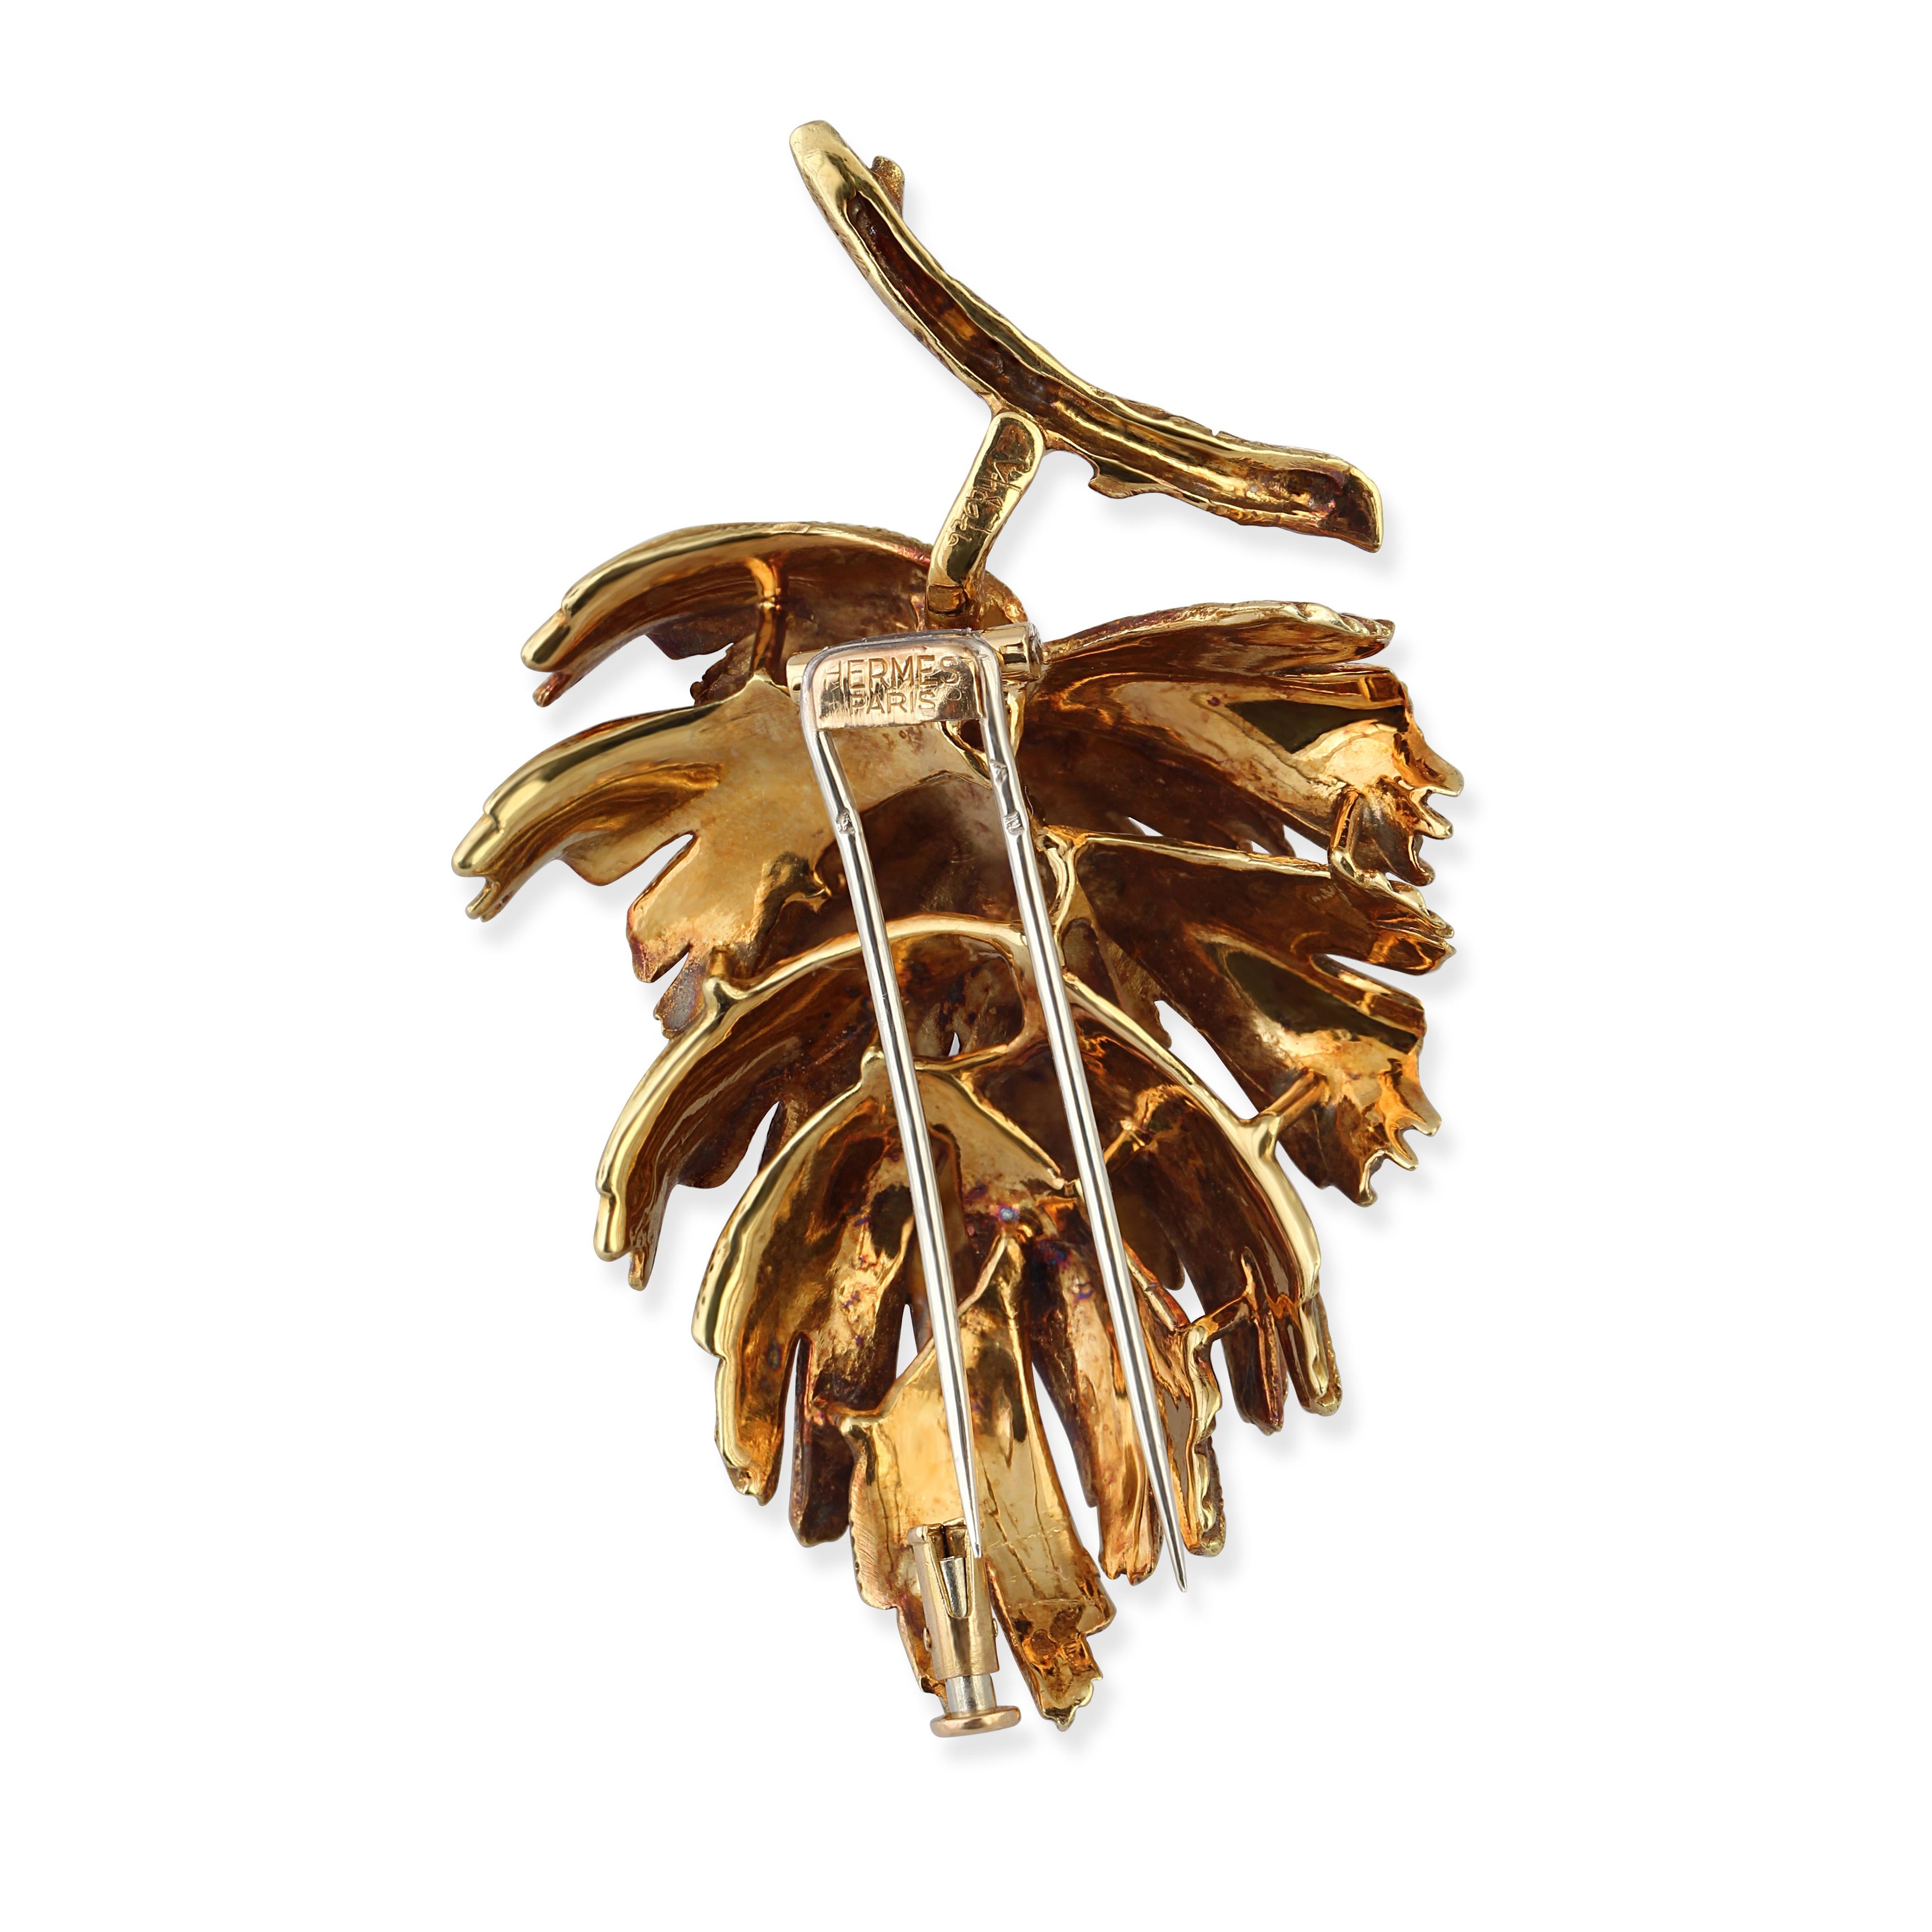 An 18k gold leaf brooch by Hermes

Length: 5.5cm
Weight: 26gr
Origin: French
